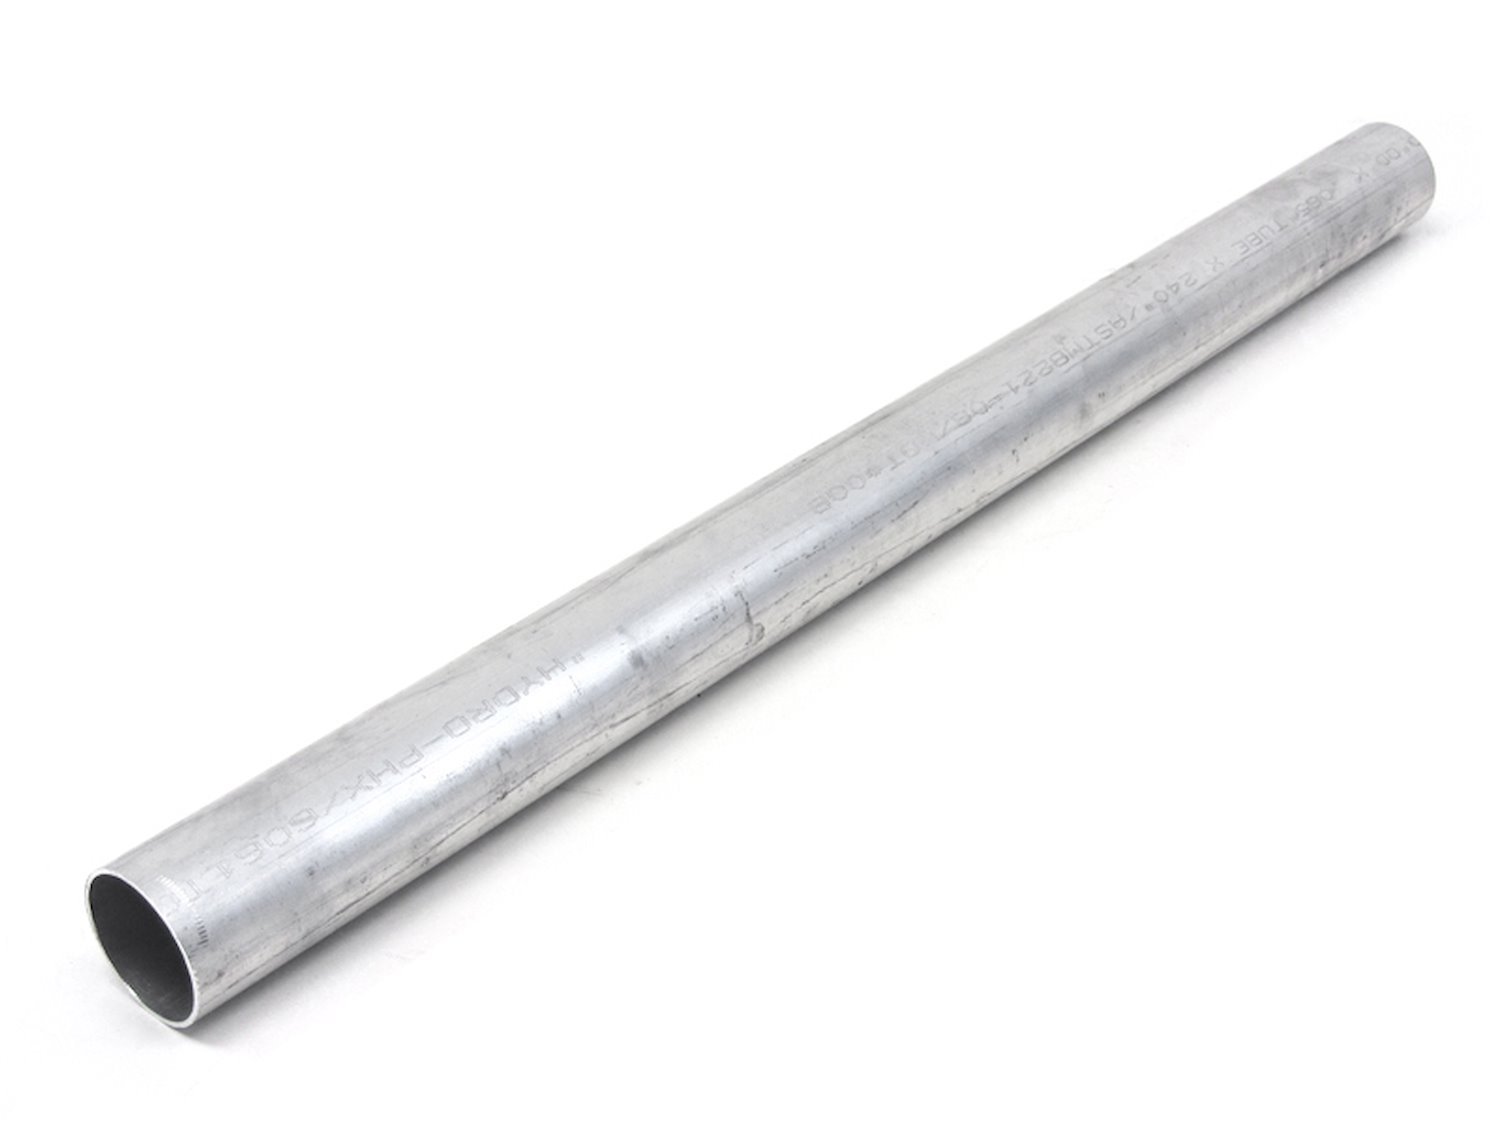 AST-3F-138 Aluminum Tubing, 6061 Aluminum, Straight Tubing, 1-3/8 in. OD, Seamless, Raw Finish, 3 ft. Long